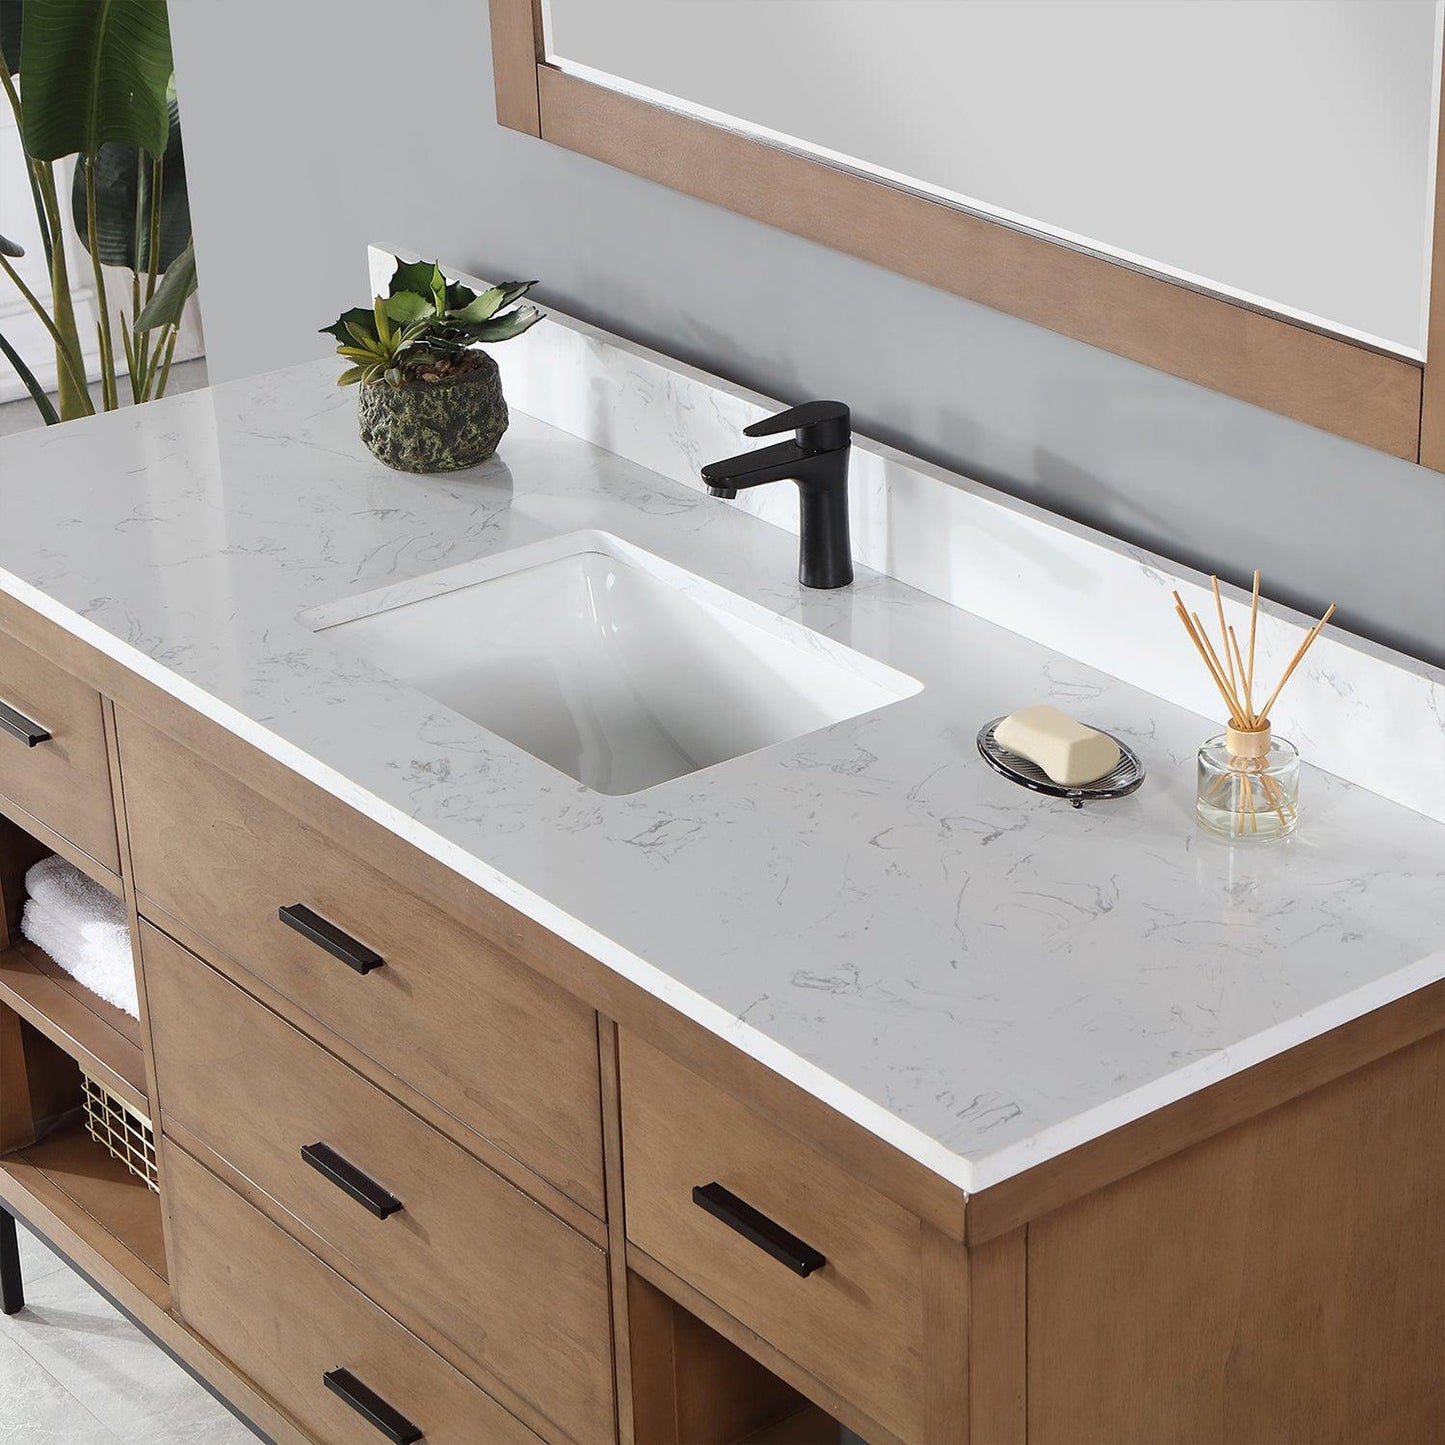 Altair Kesia 60" Brown Pine Freestanding Single Bathroom Vanity Set With Mirror, Stylish Aosta White Composite Stone Top, Rectangular Undermount Ceramic Sink, Overflow, and Backsplash